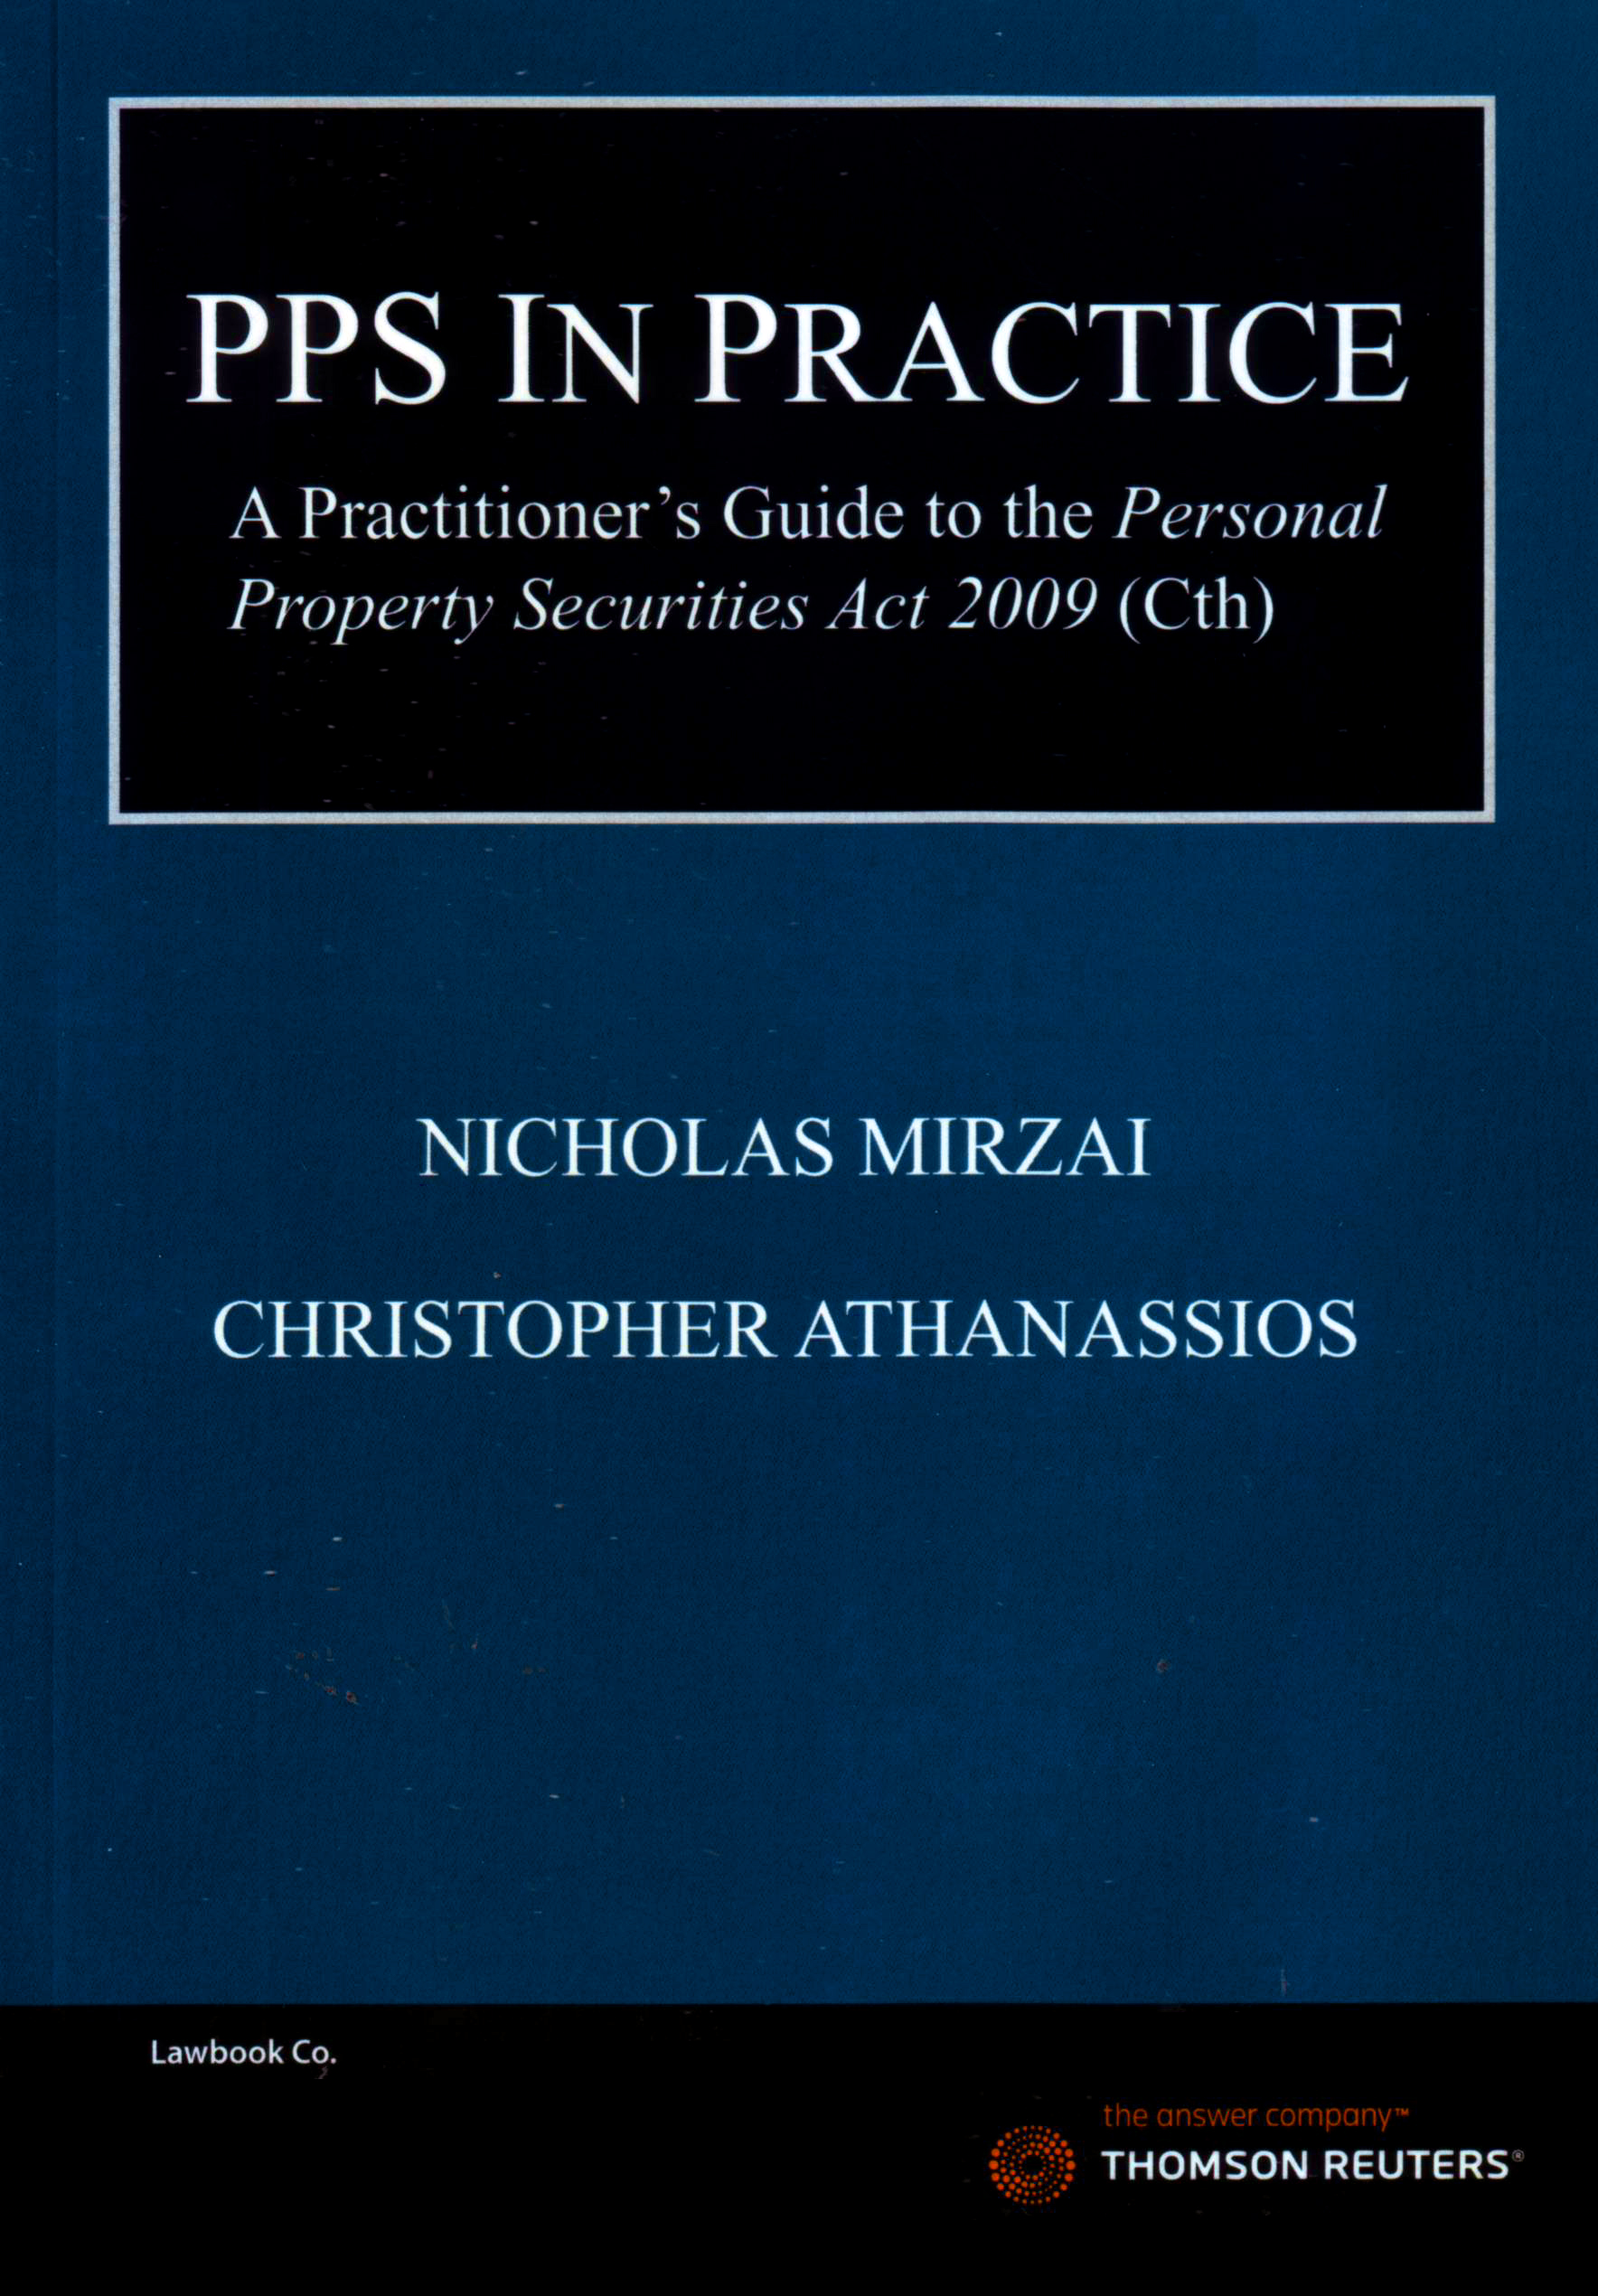 Personal Property Securities in Practice